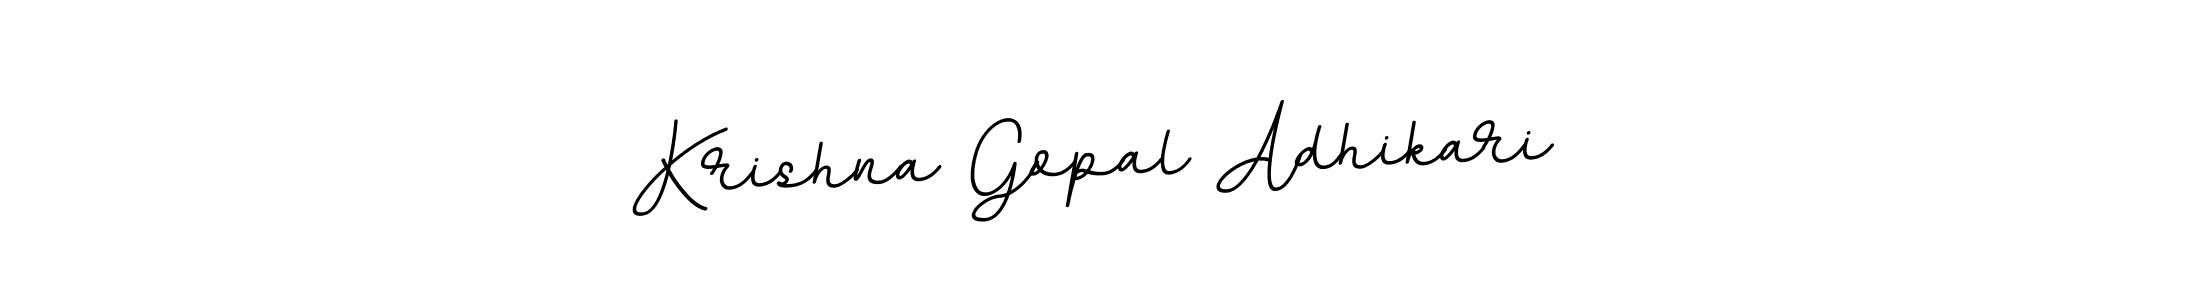 How to Draw Krishna Gopal Adhikari signature style? BallpointsItalic-DORy9 is a latest design signature styles for name Krishna Gopal Adhikari. Krishna Gopal Adhikari signature style 11 images and pictures png